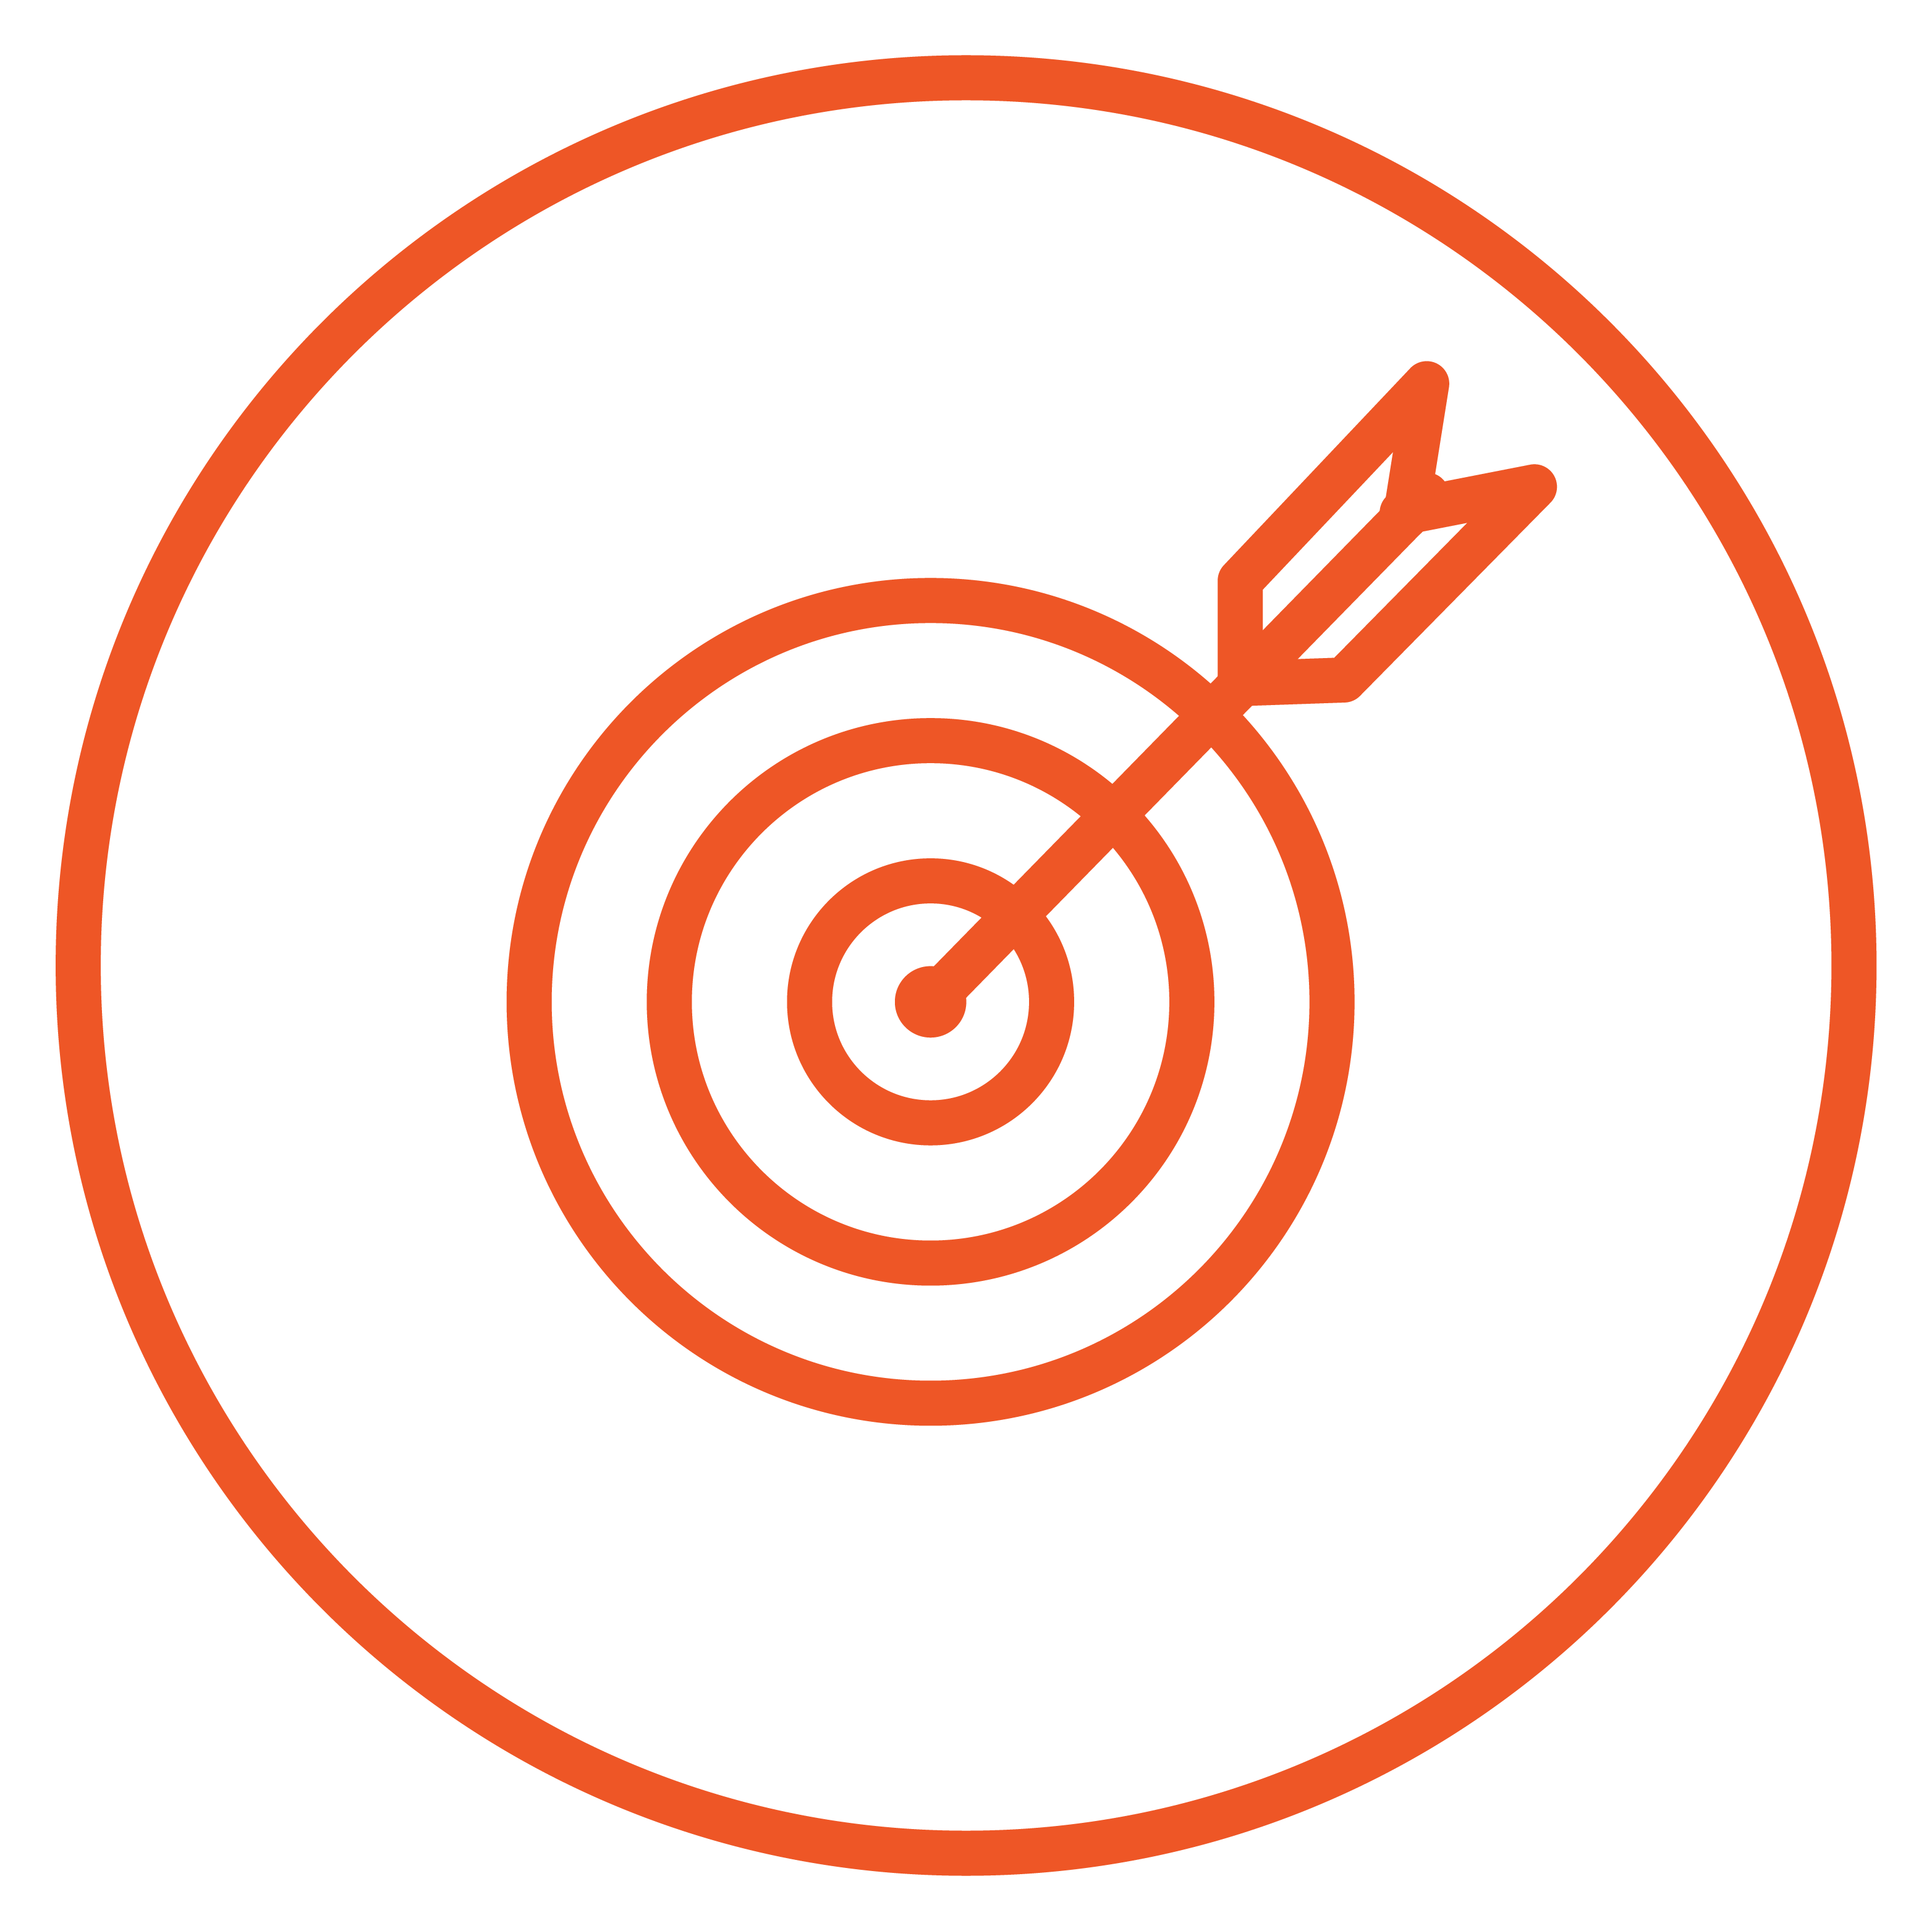 Performance icon with bullseye